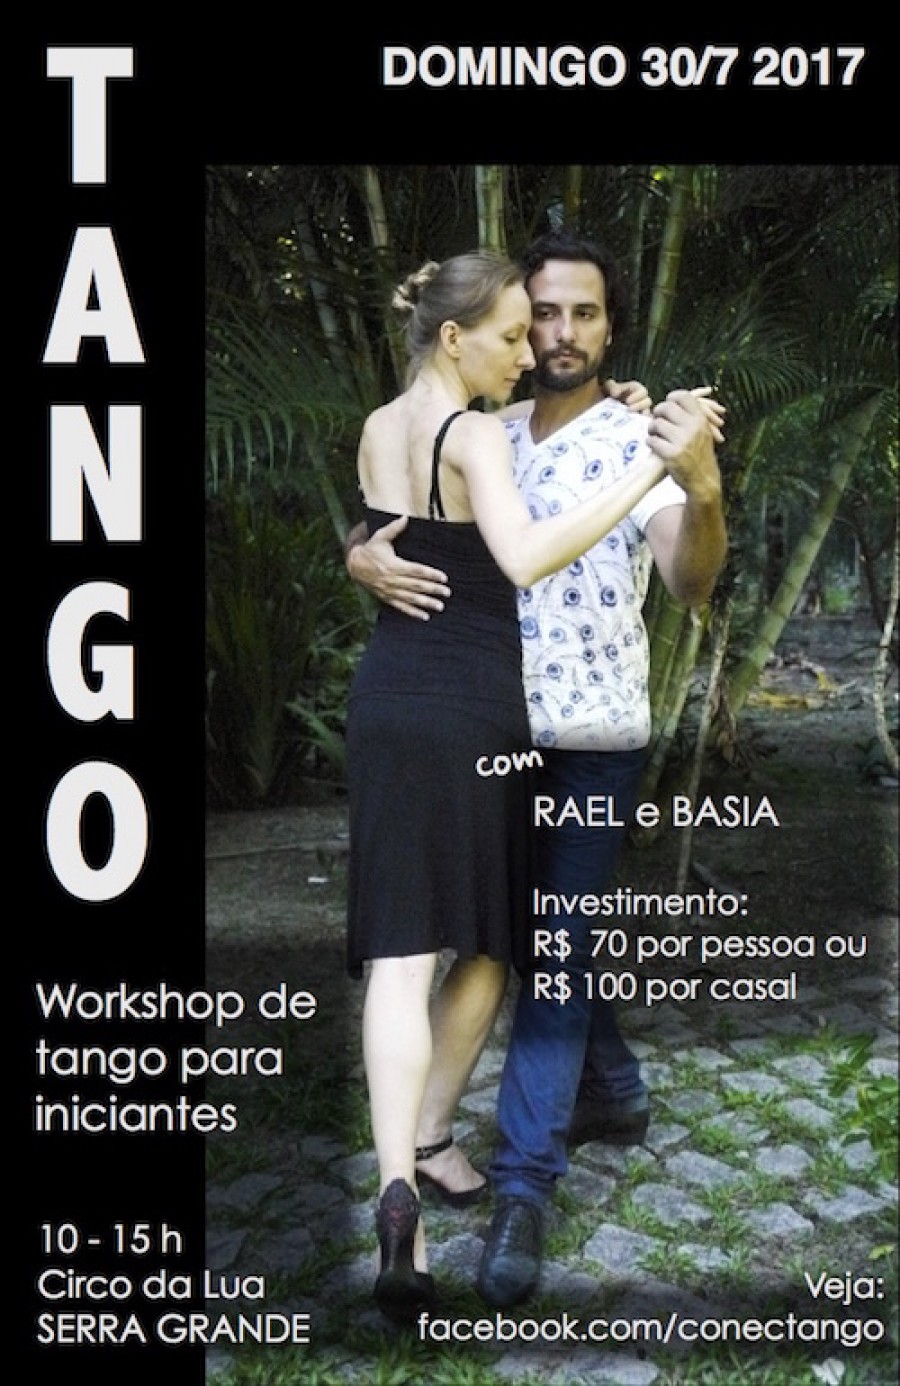 Workshop de tango para iniciantes em Serra Grande